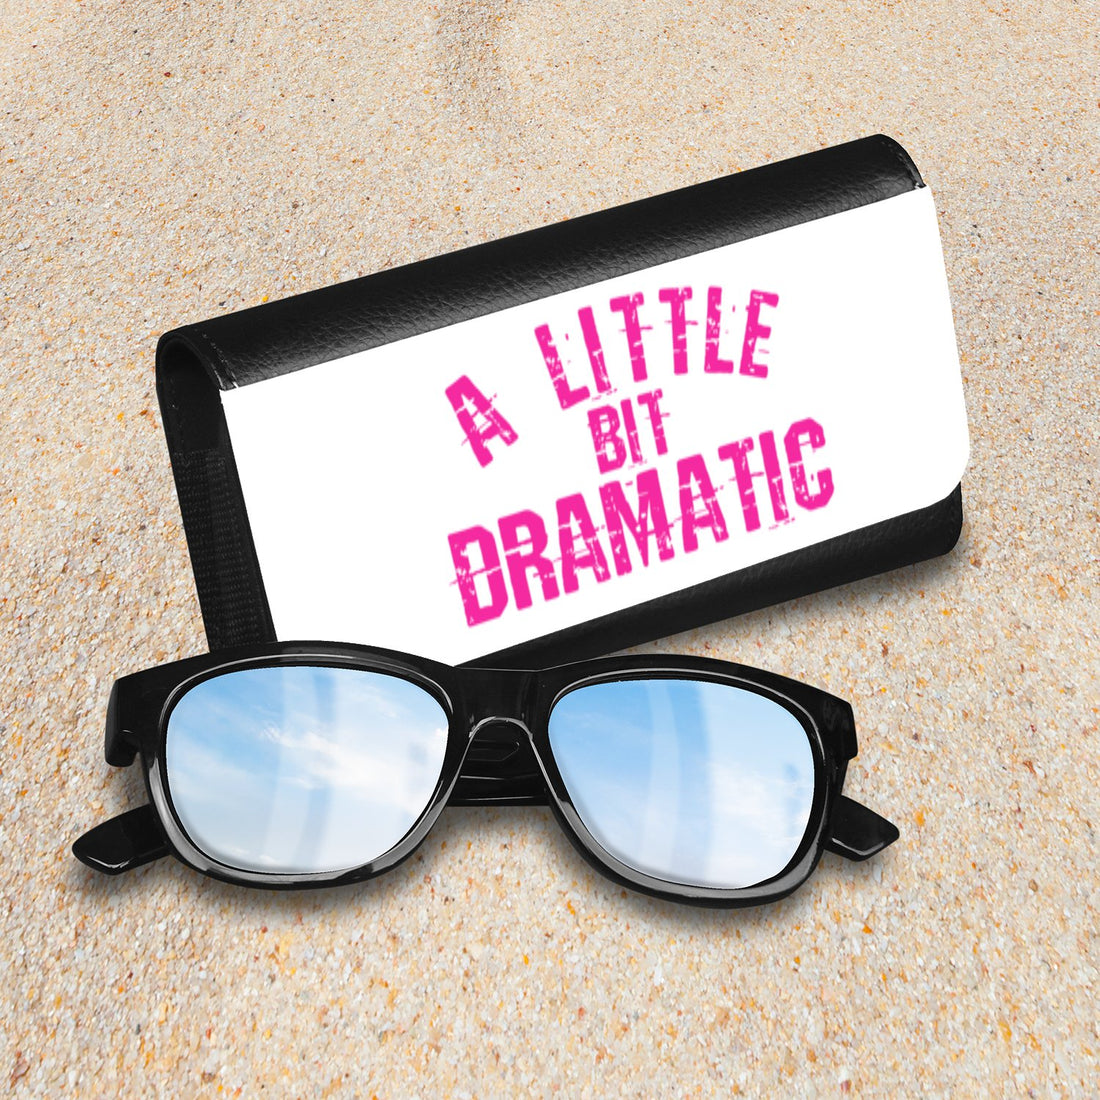 Little Bit Dramatic Sunglasses Case - Positively Sassy - Little Bit Dramatic Sunglasses Case